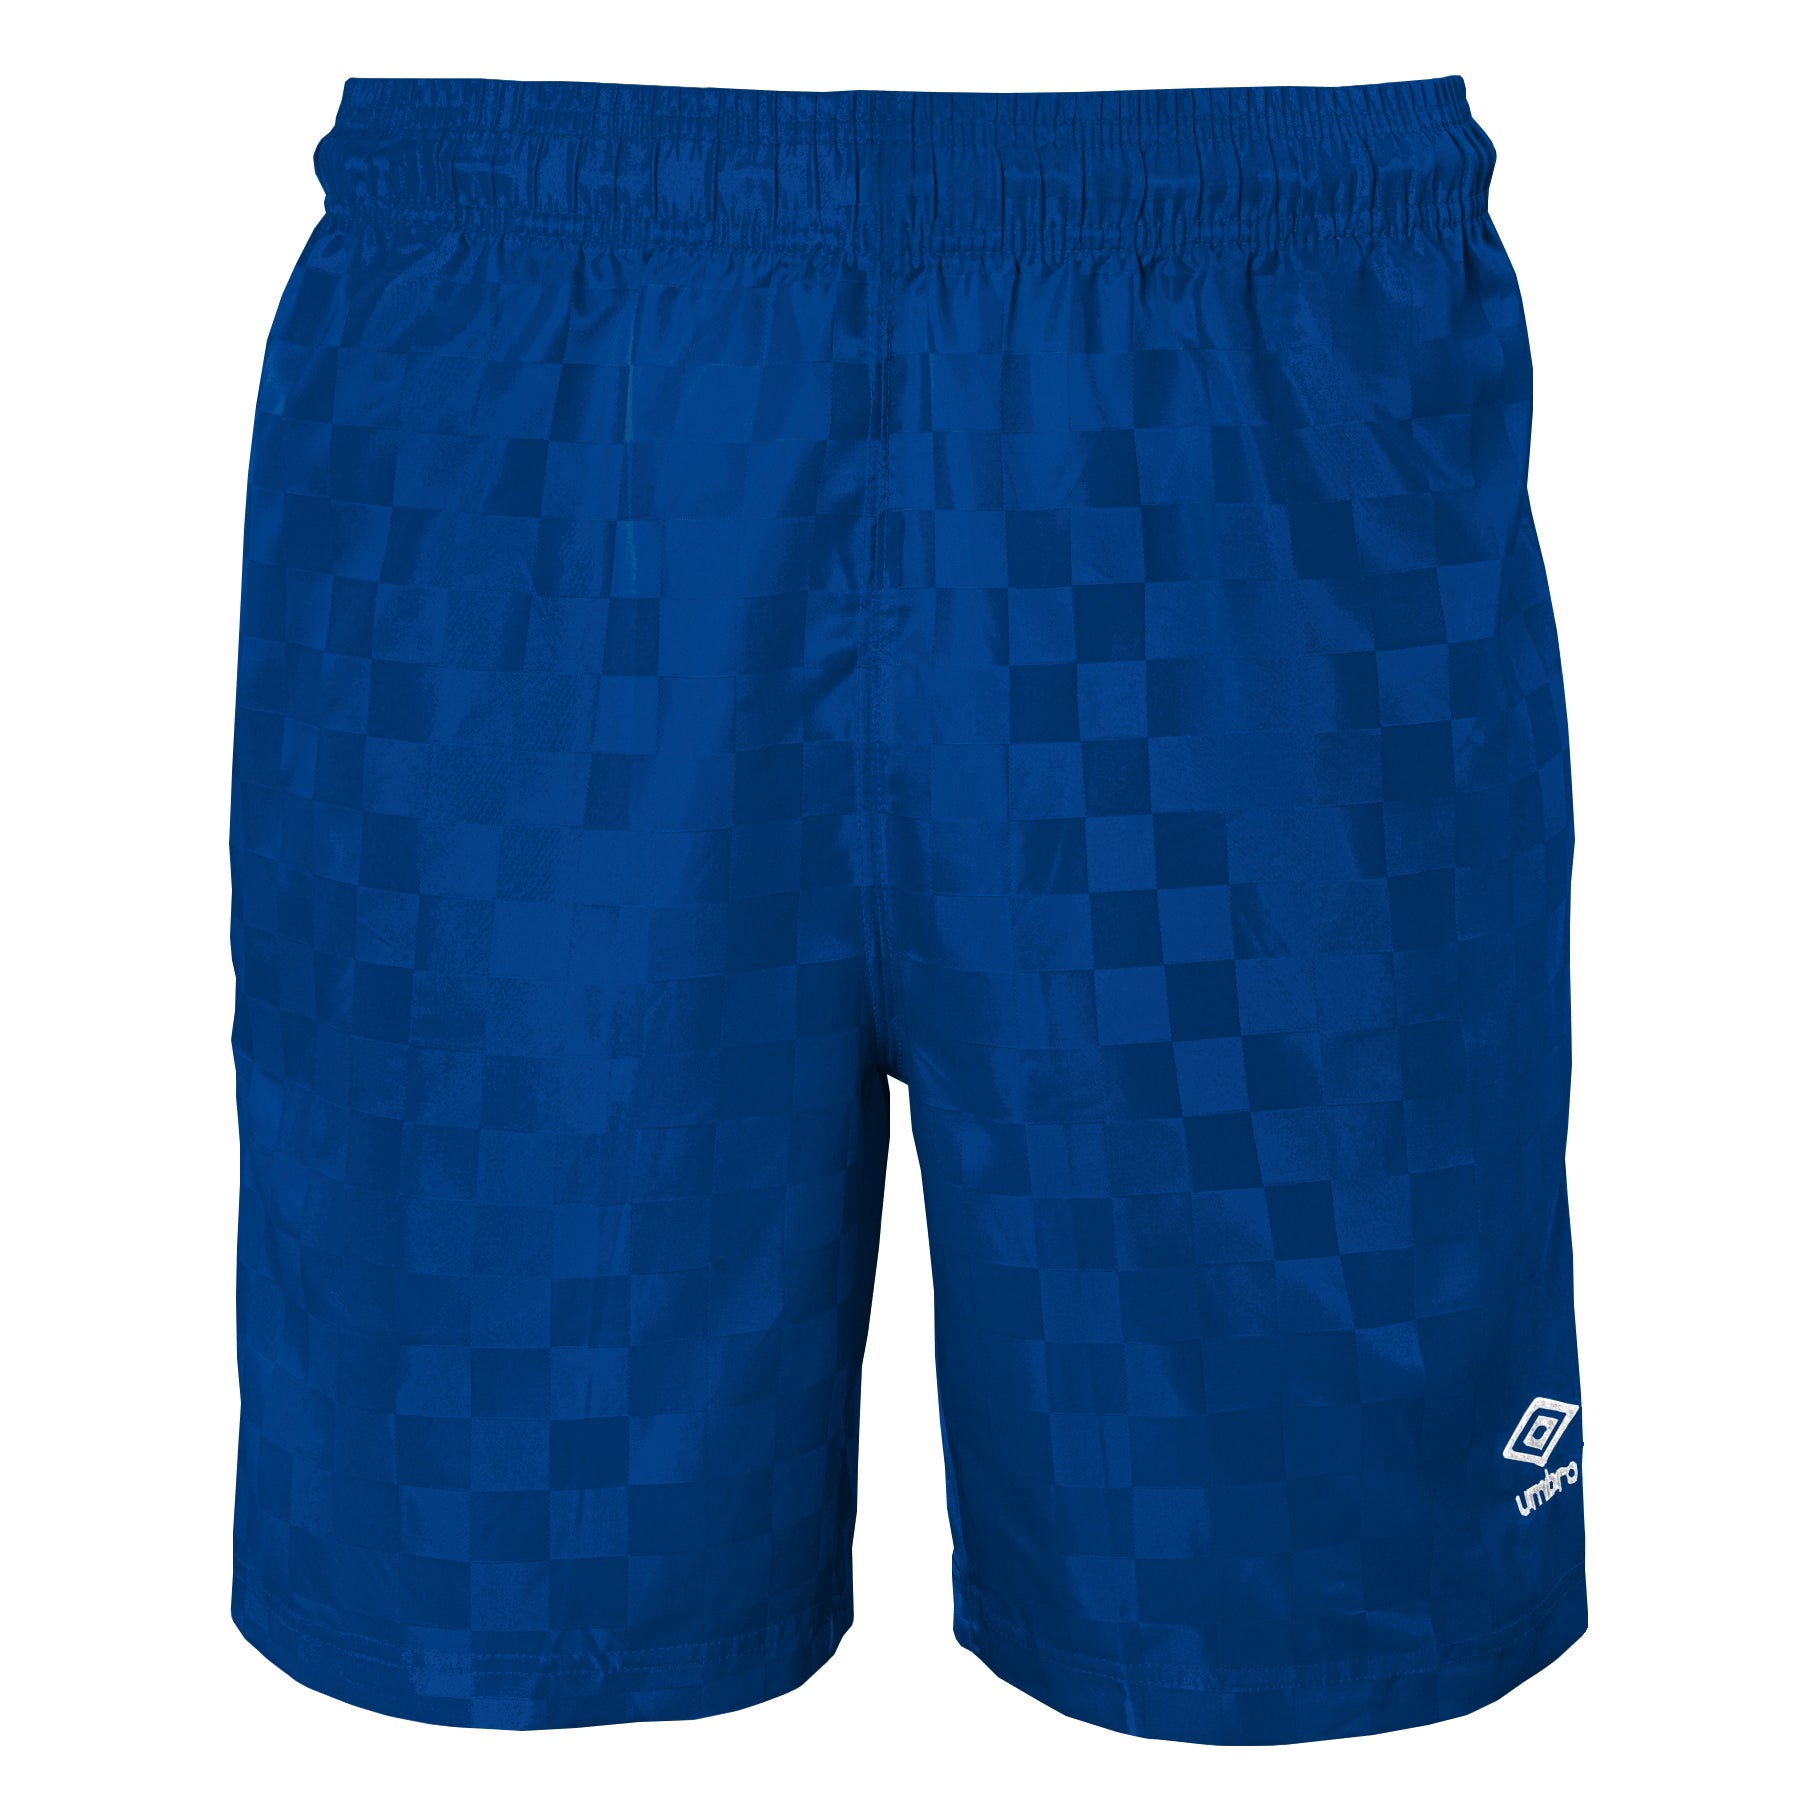 Checkered Shorts - YOUTH